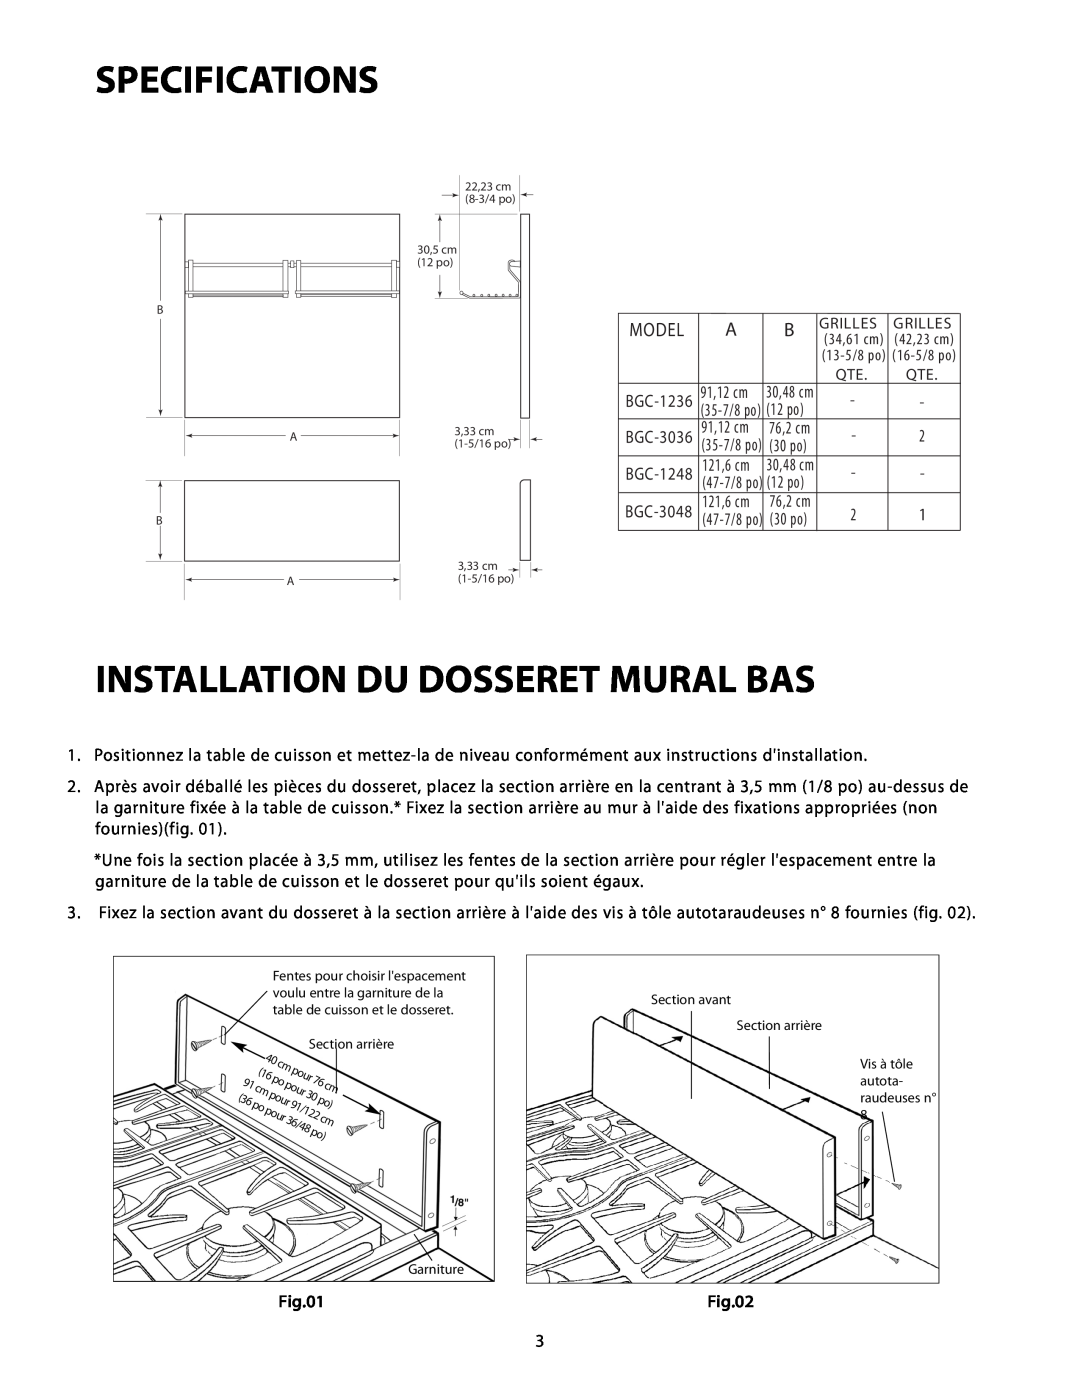 DCS BGC-3048, BGC-1236, BGC-3036, BGC-1248 manual Installation Du Dosseret Mural Bas, Specifications, Model 